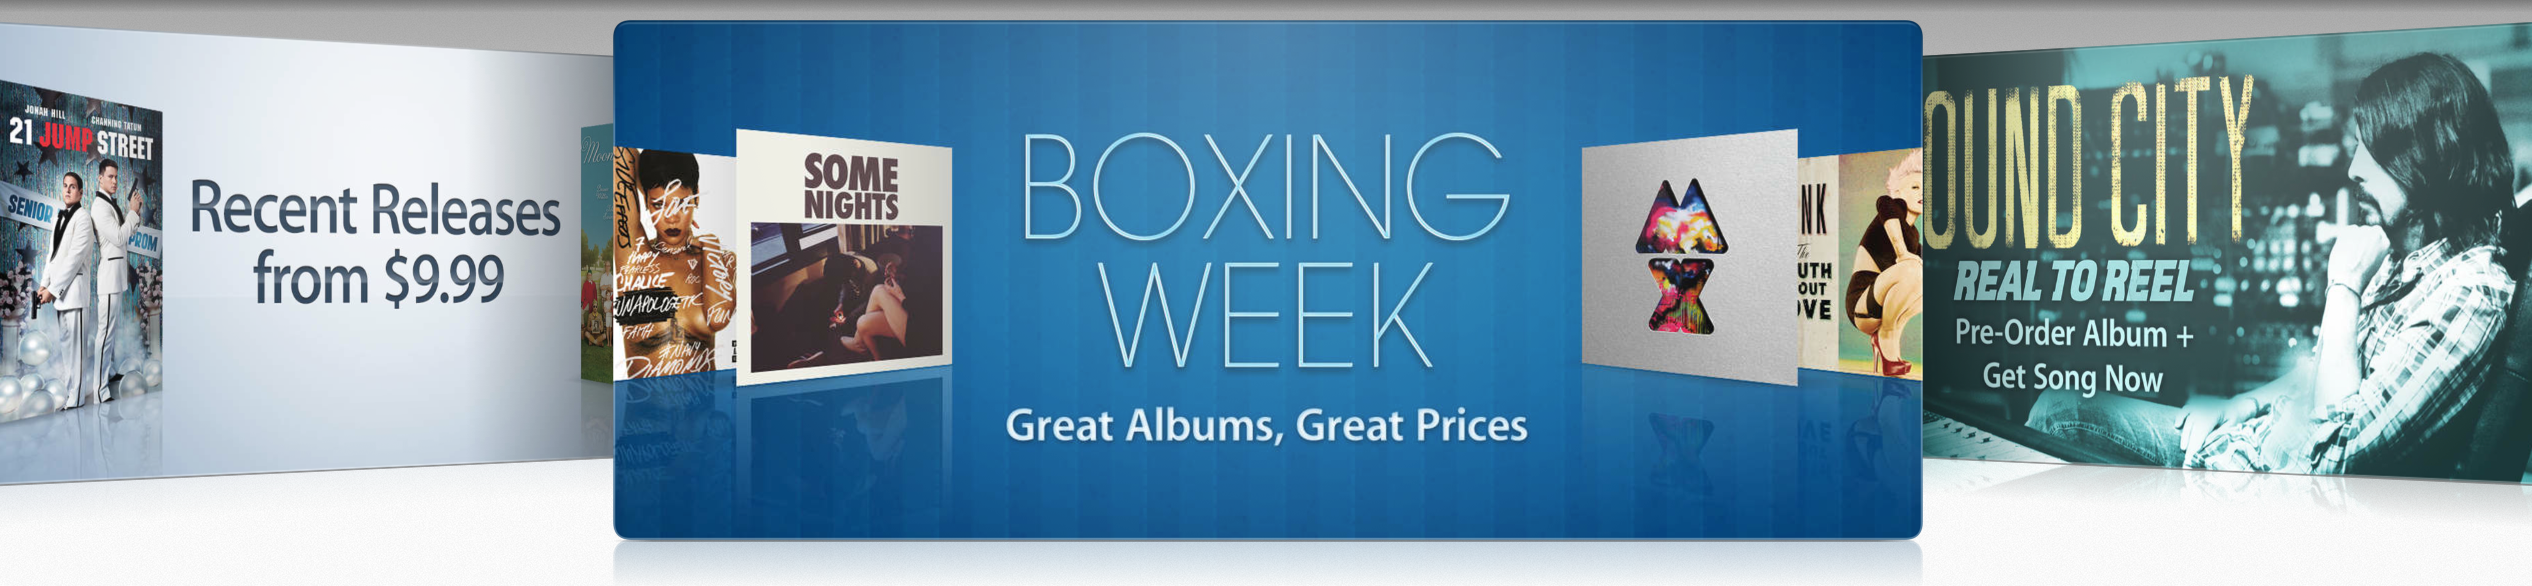 Apple-Boxing-Week-iTunes-2012